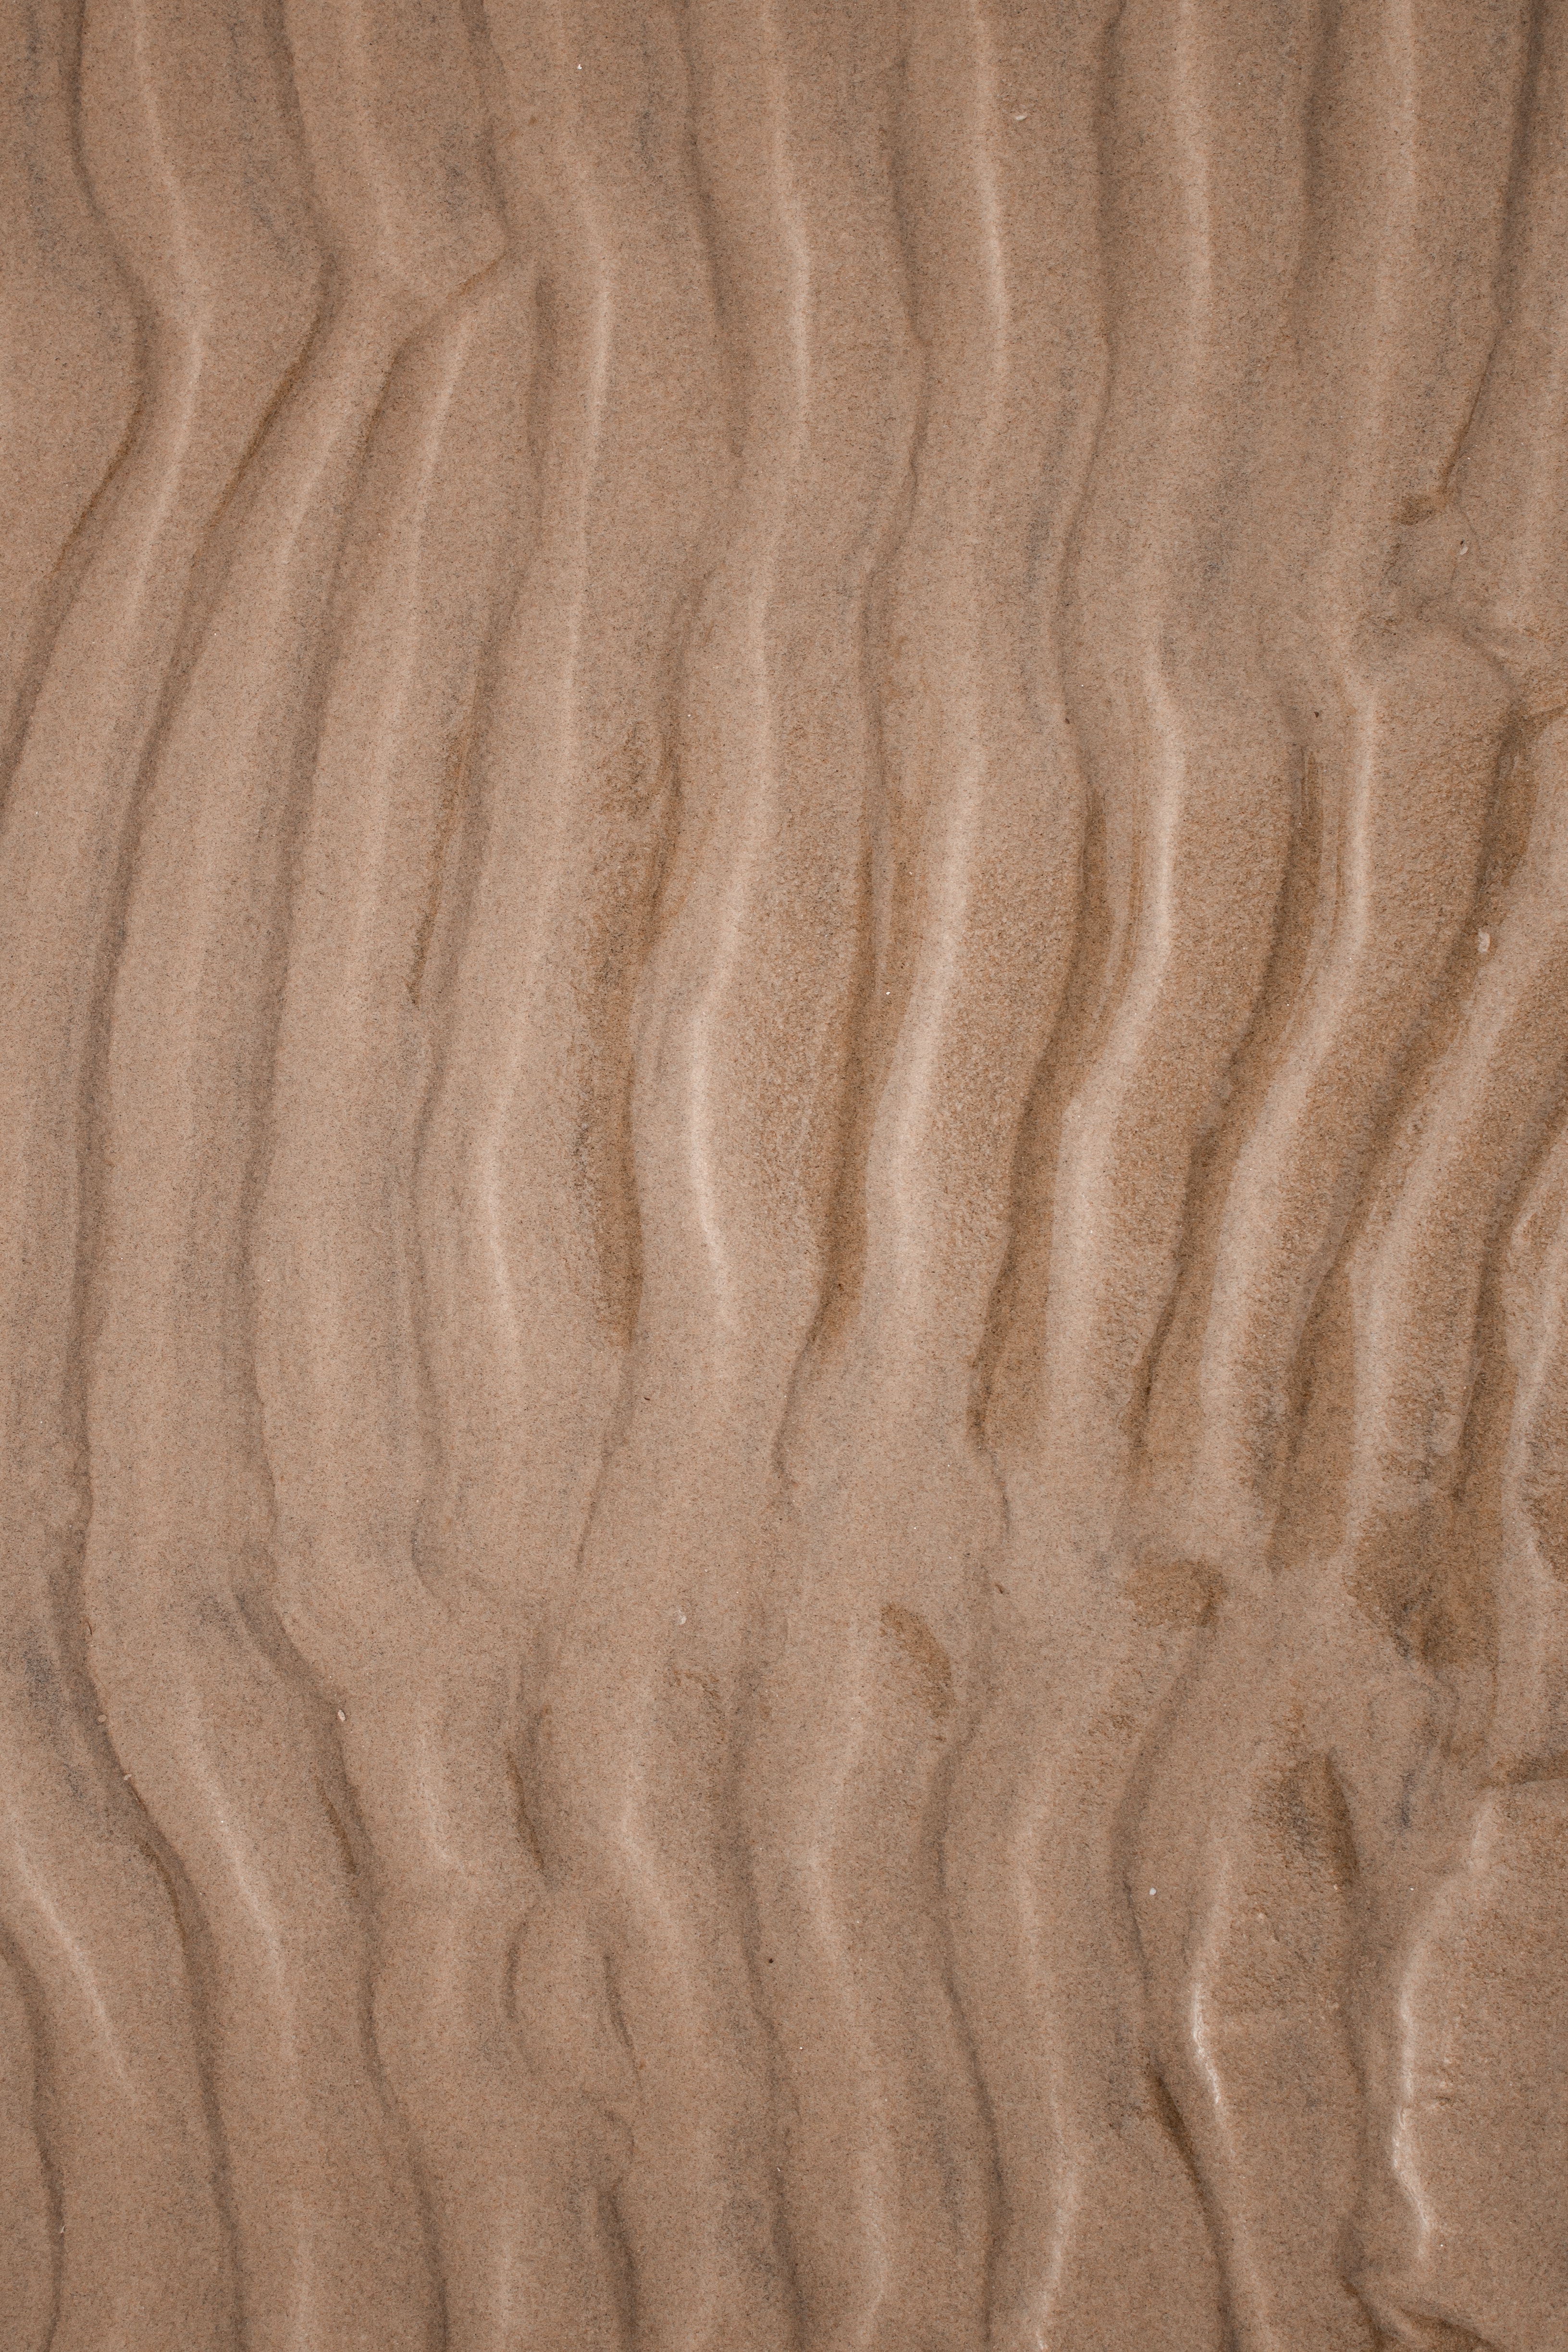 Full HD sand, texture, lines, textures, wavy, stripes, streaks